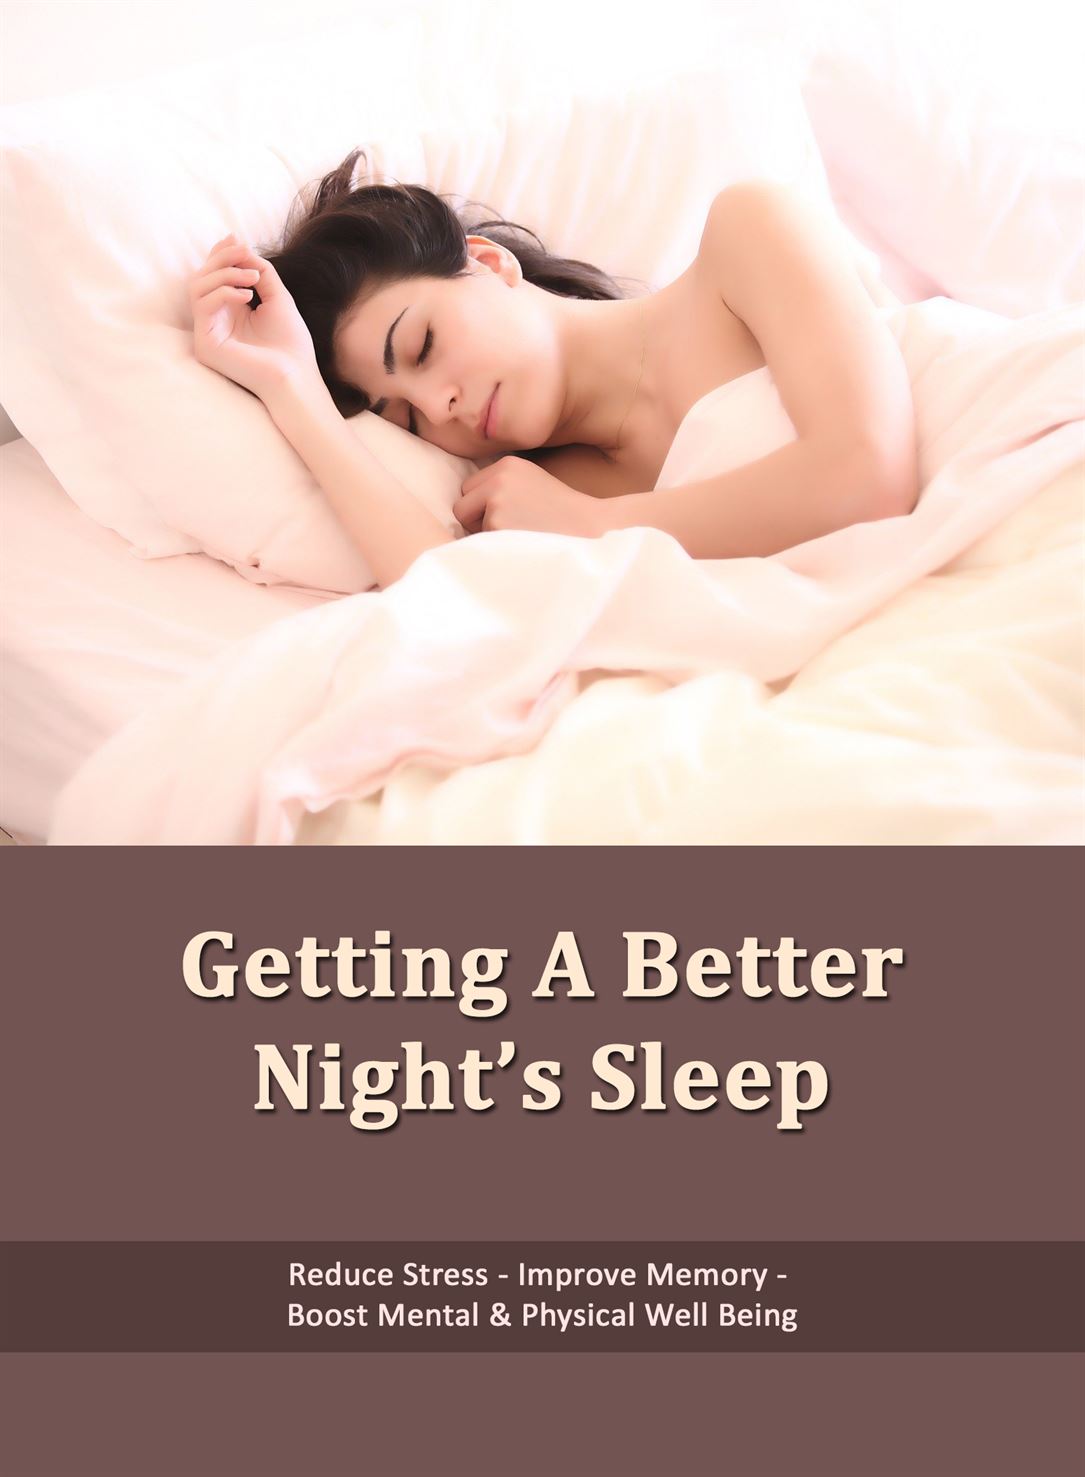 Getting Better Sleep at Night